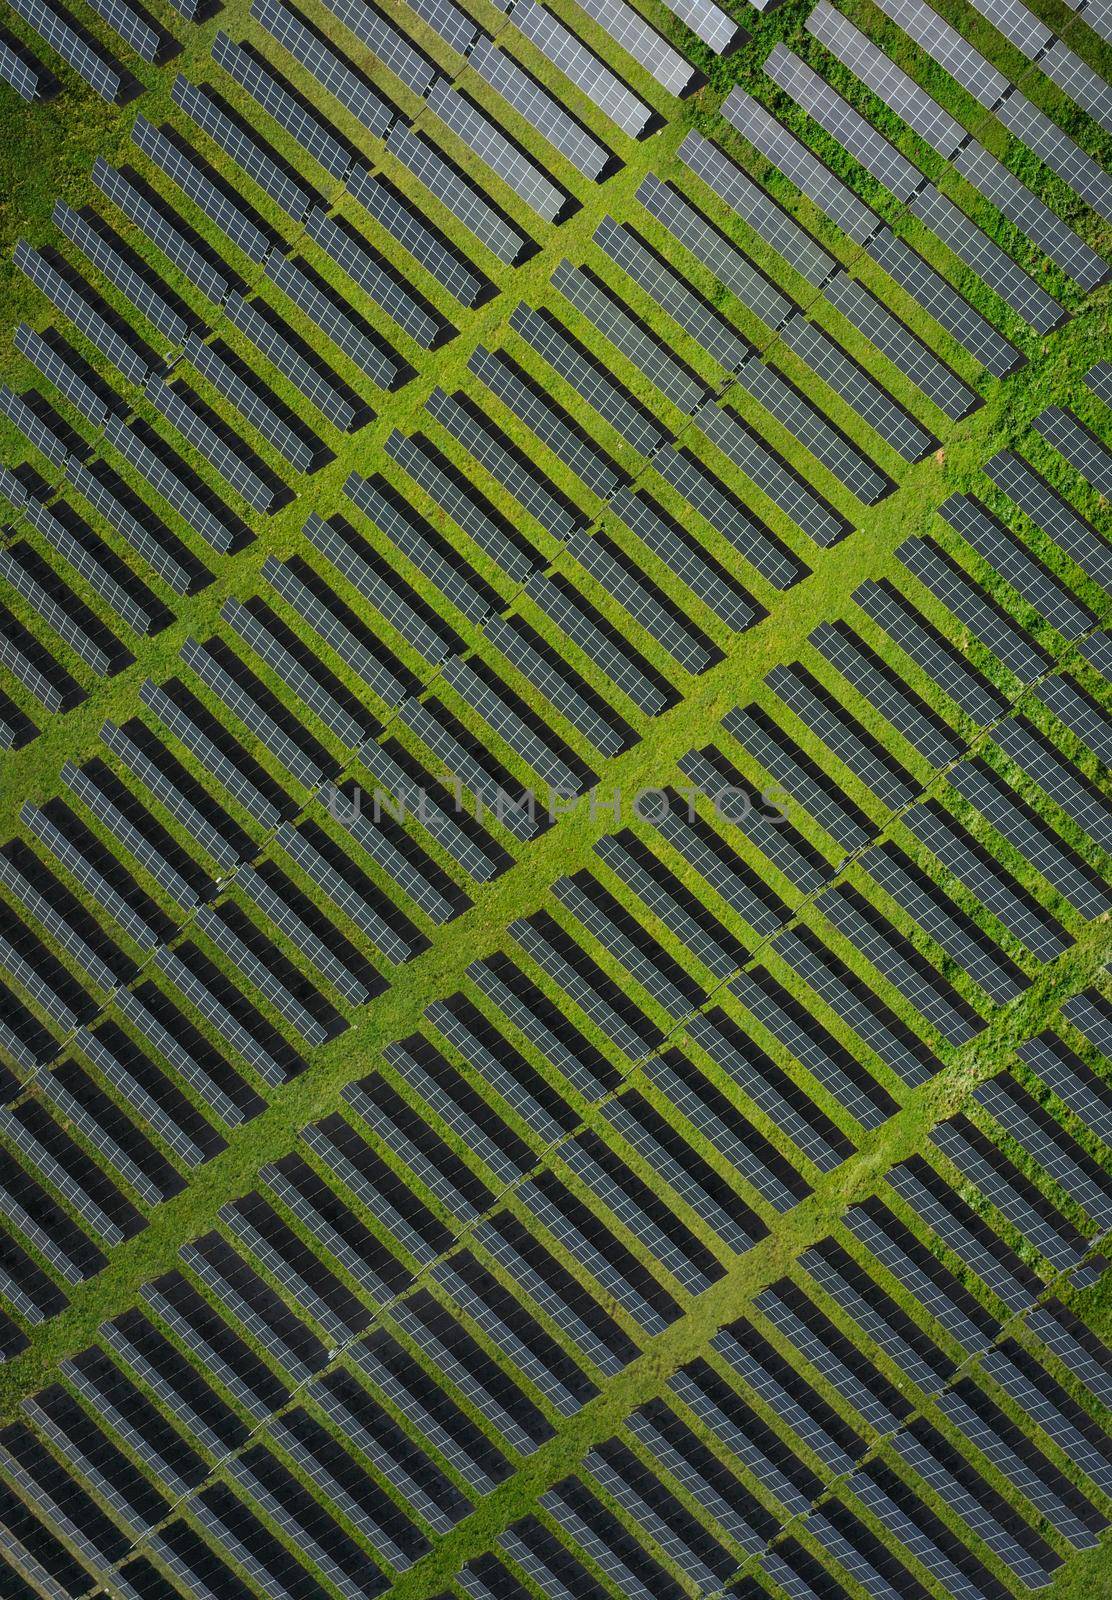 Solar energy power farm. Aerial view of solar panels. by Zurijeta